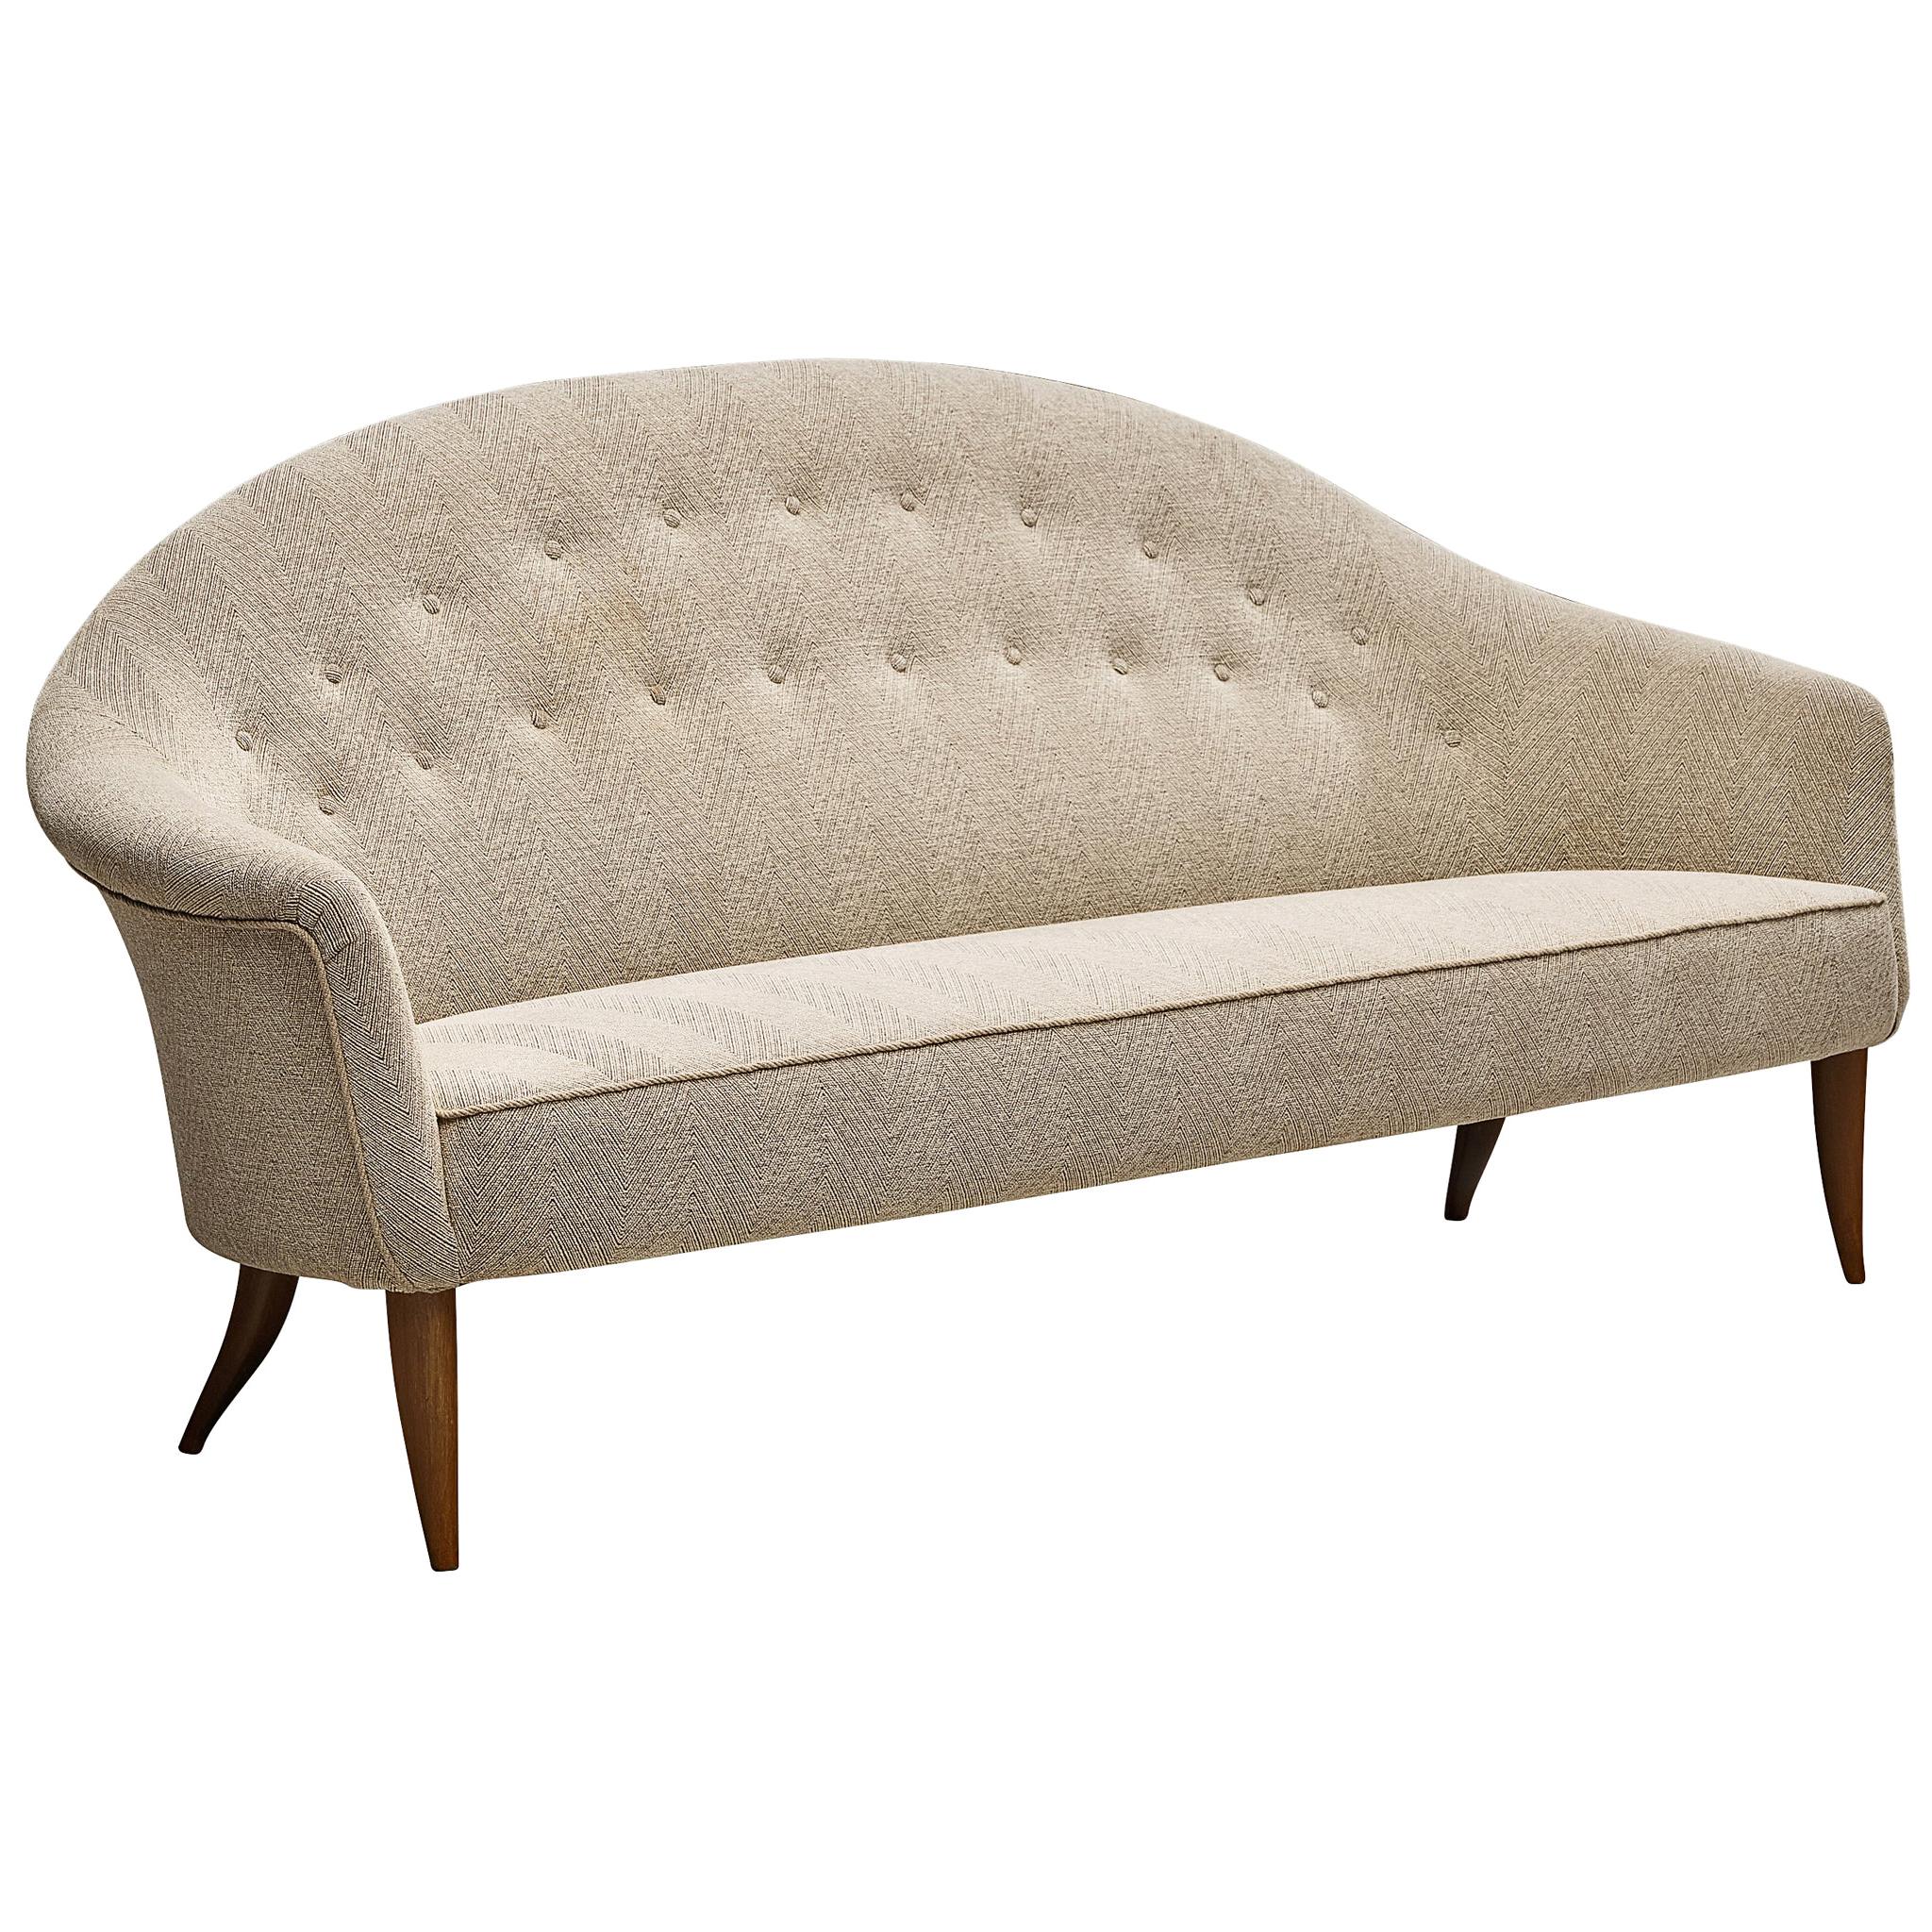 Kerstin Horlin-Holmquist 'Paradiset' Sofa in Off-White Upholstery